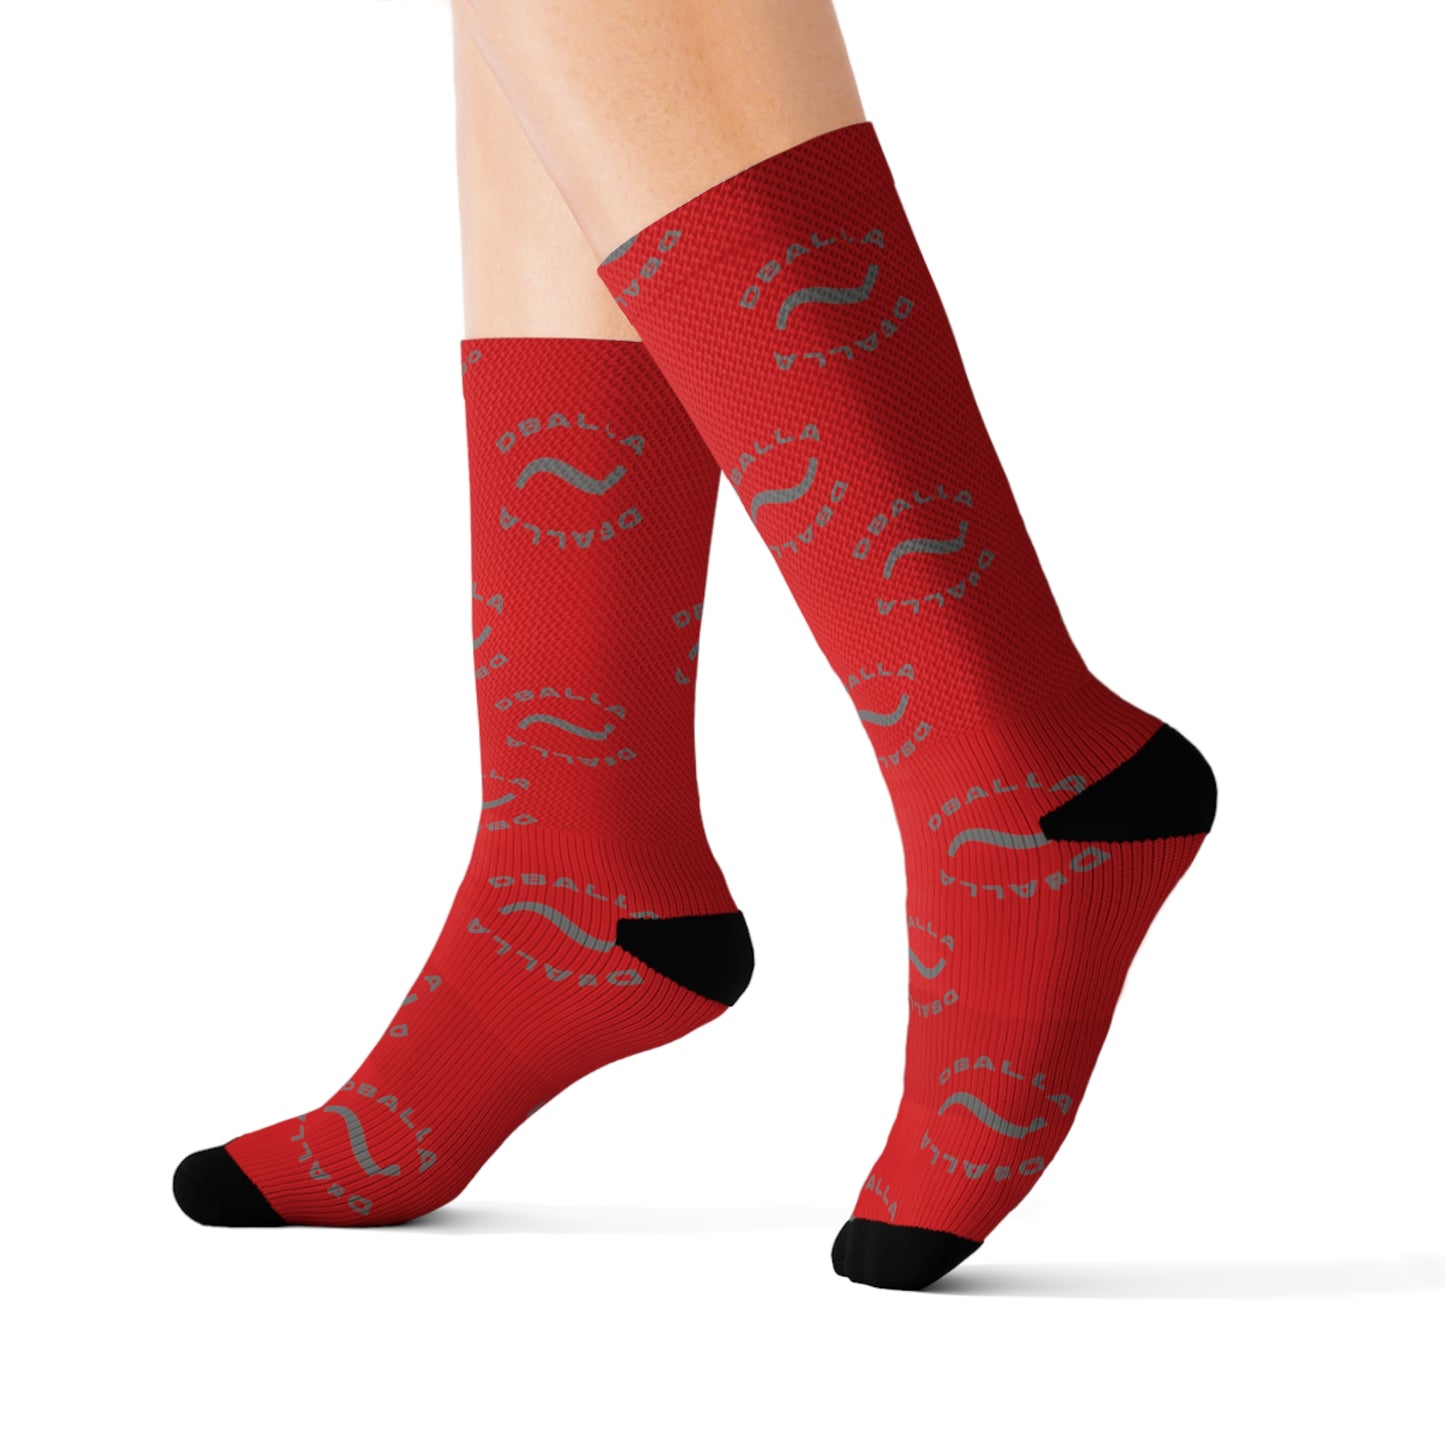 THE FOOTBALLA Socks - Red